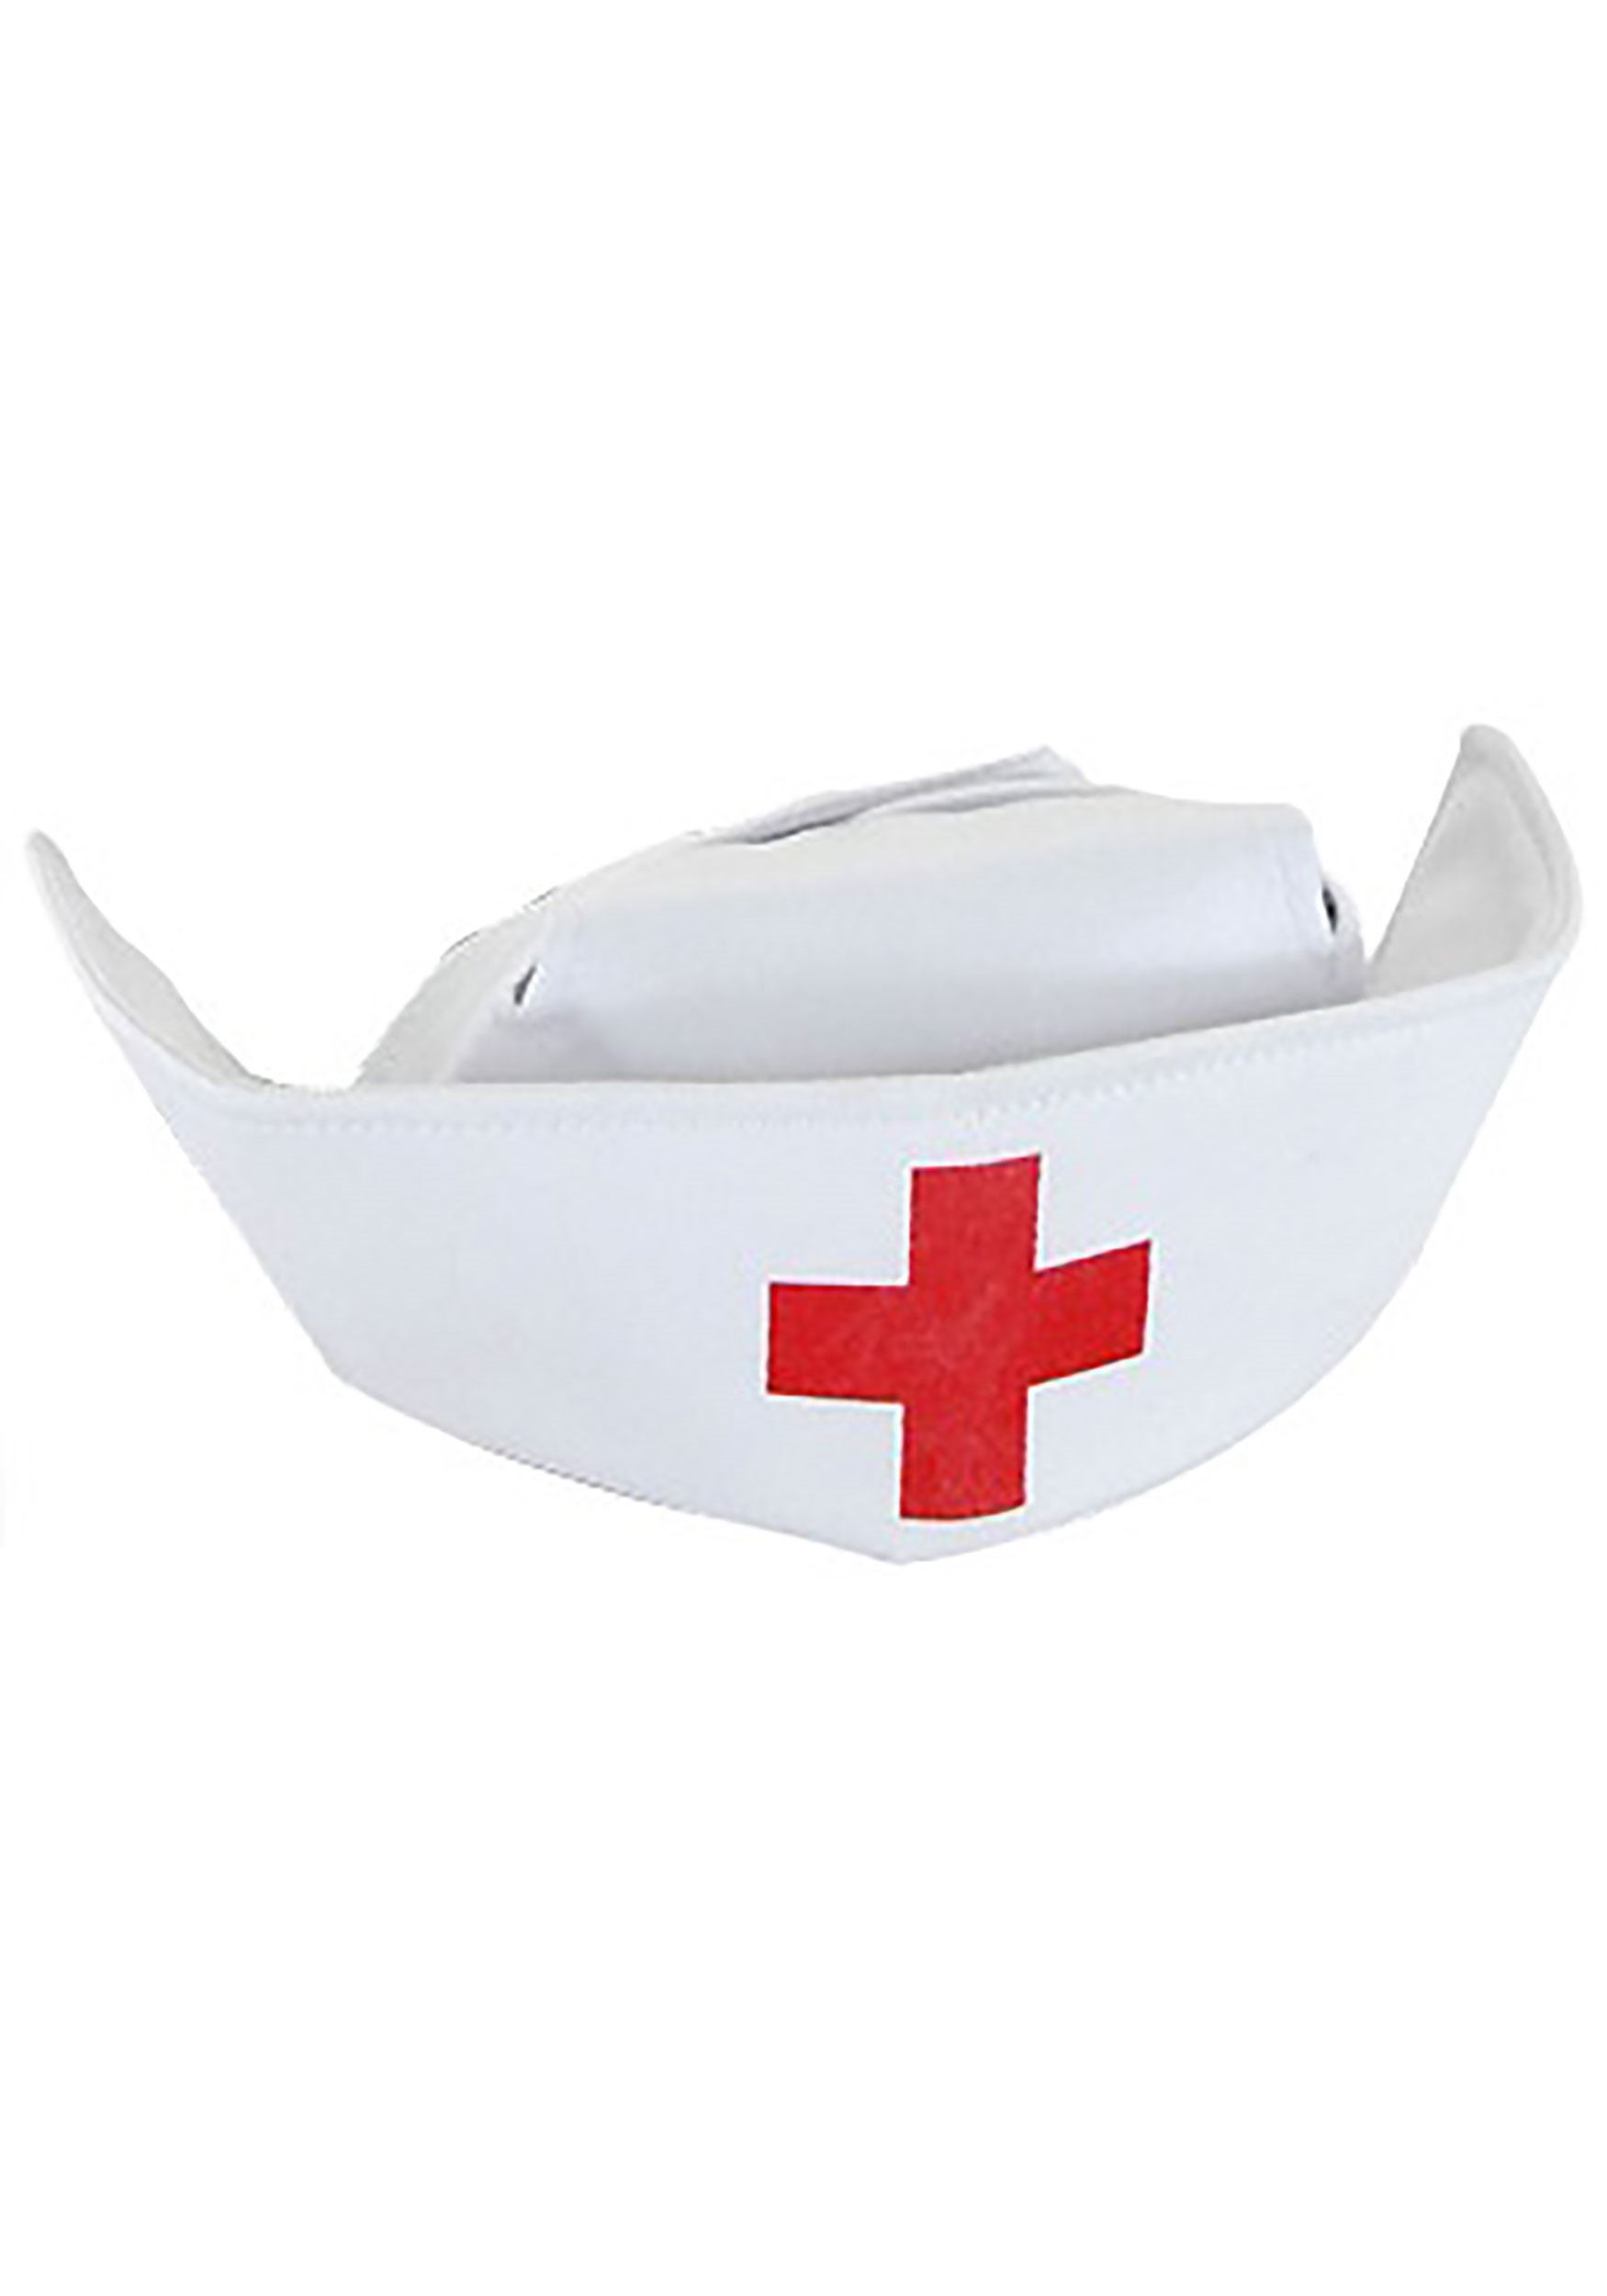 Women's White Nurse Costume Hat